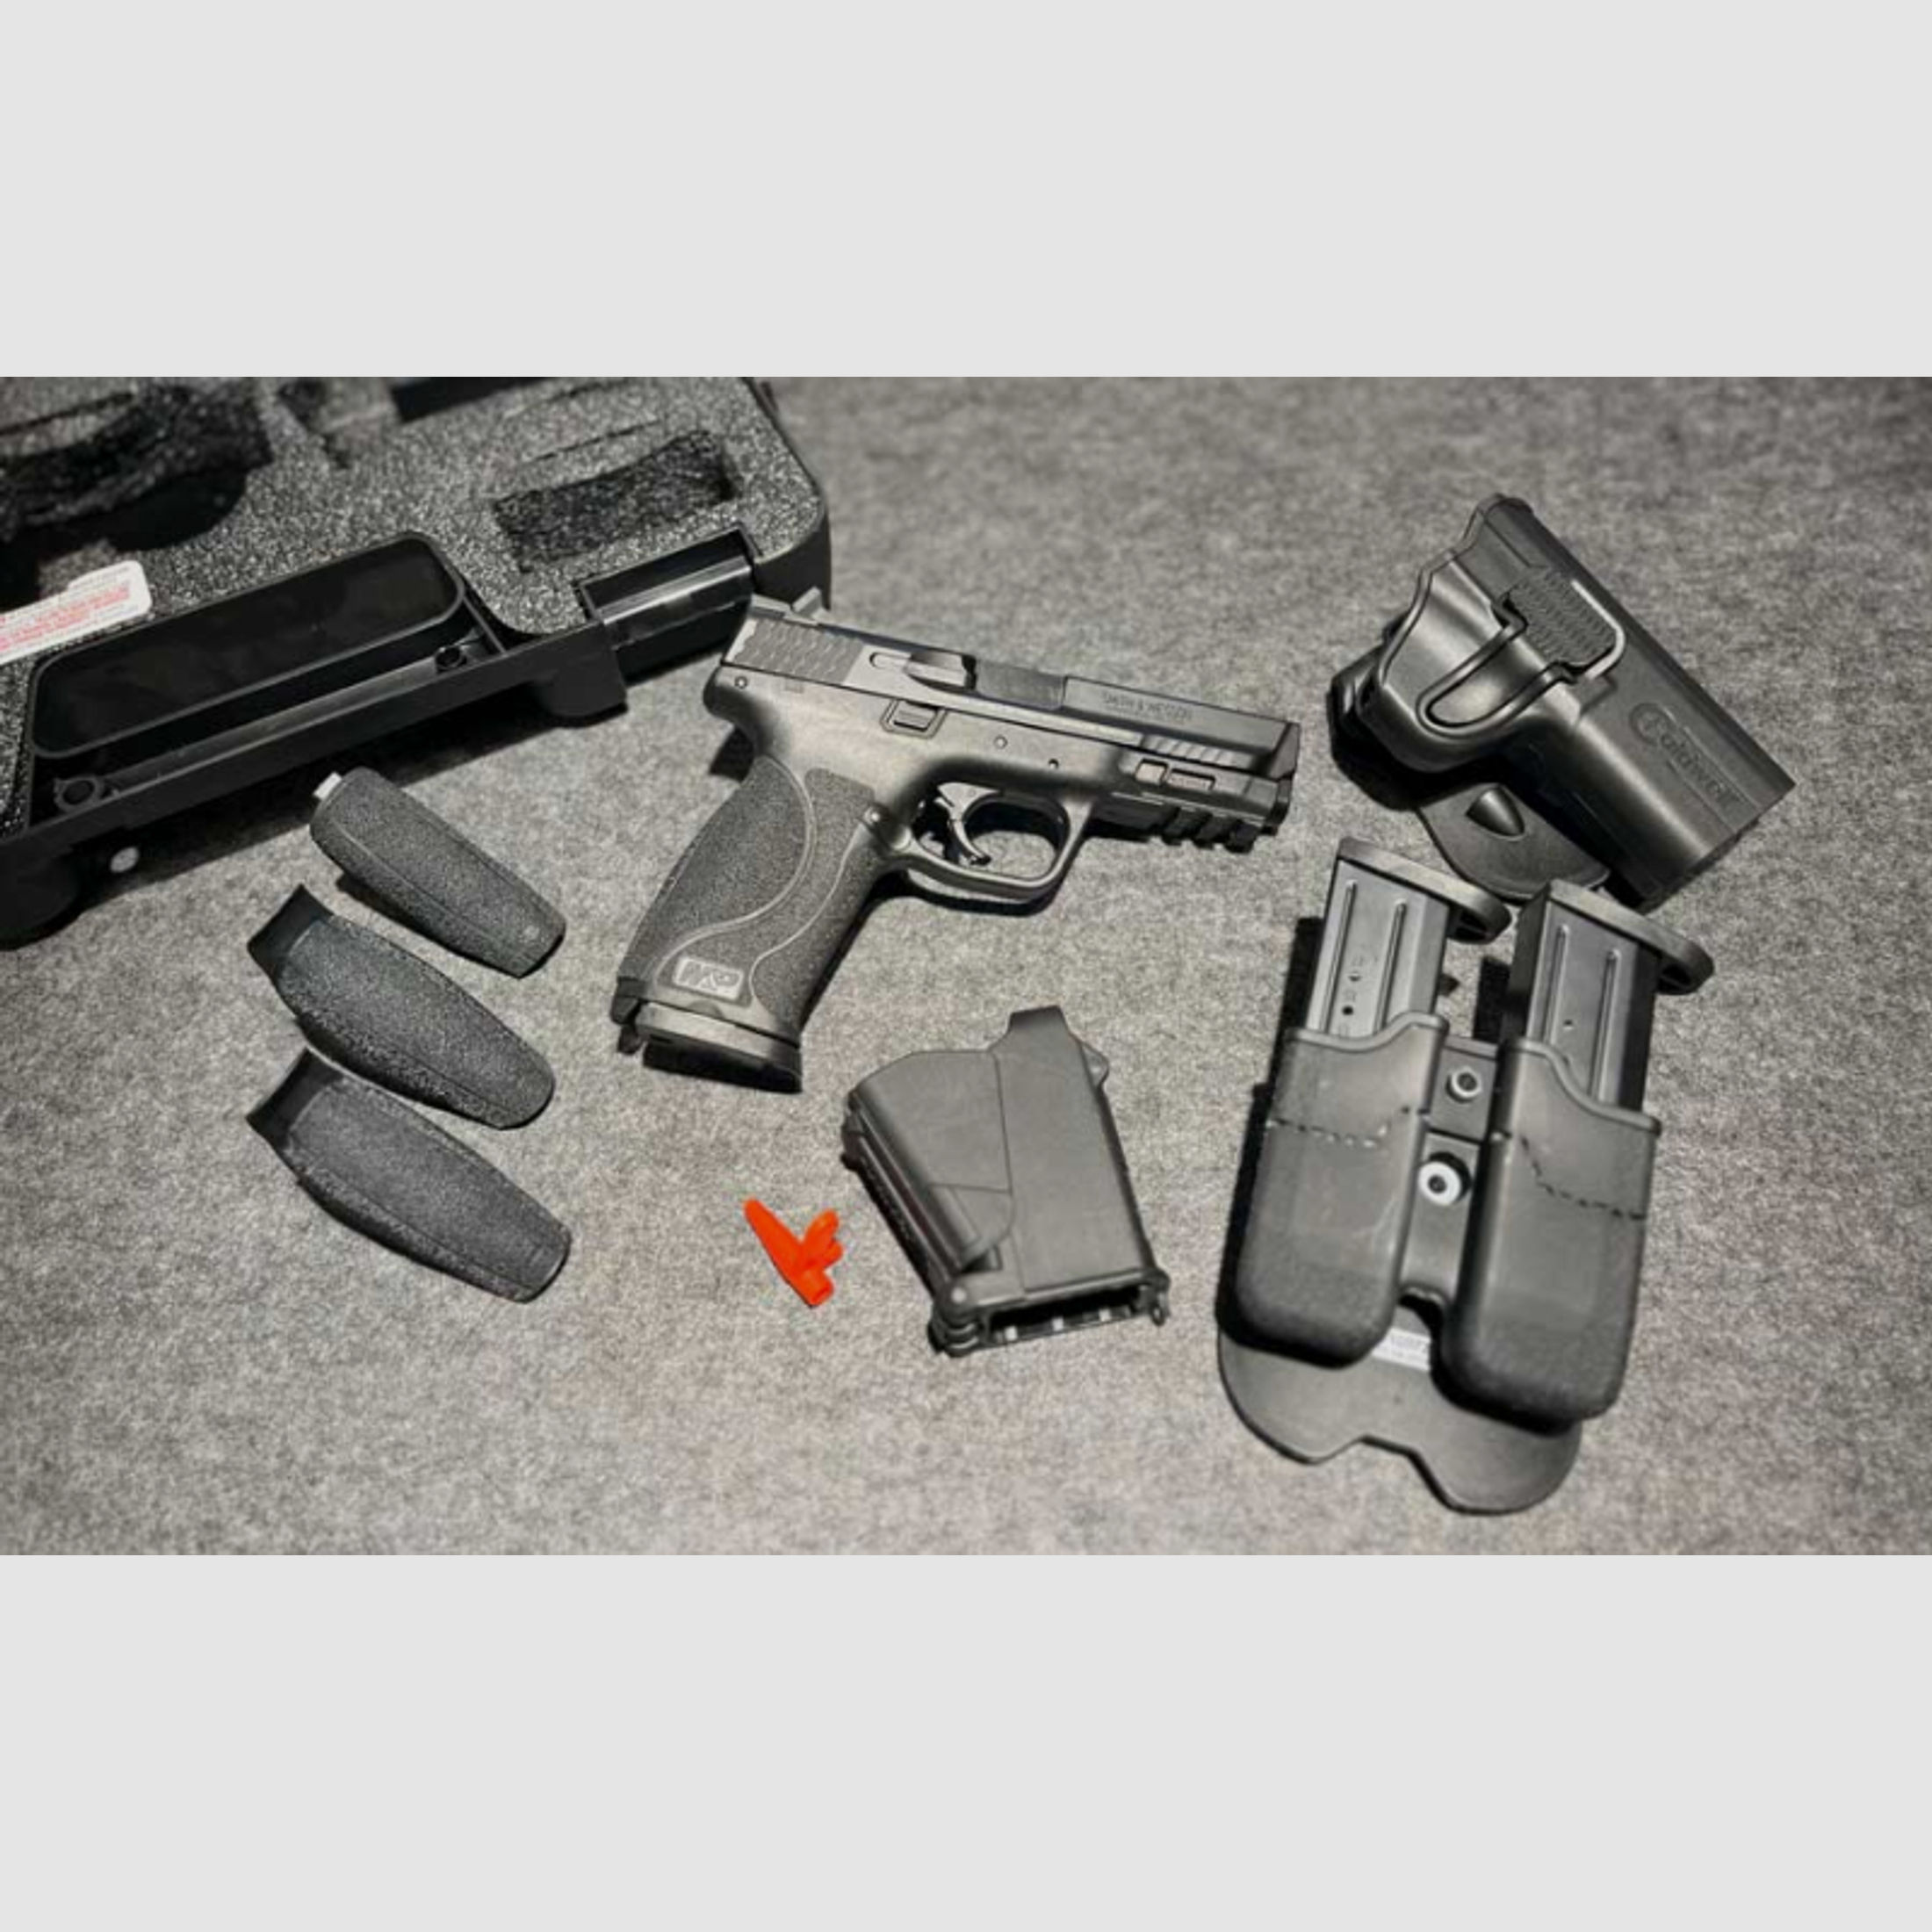 Smith & Wesson M&P9 Carry & Range Kit - NEU & OVP!